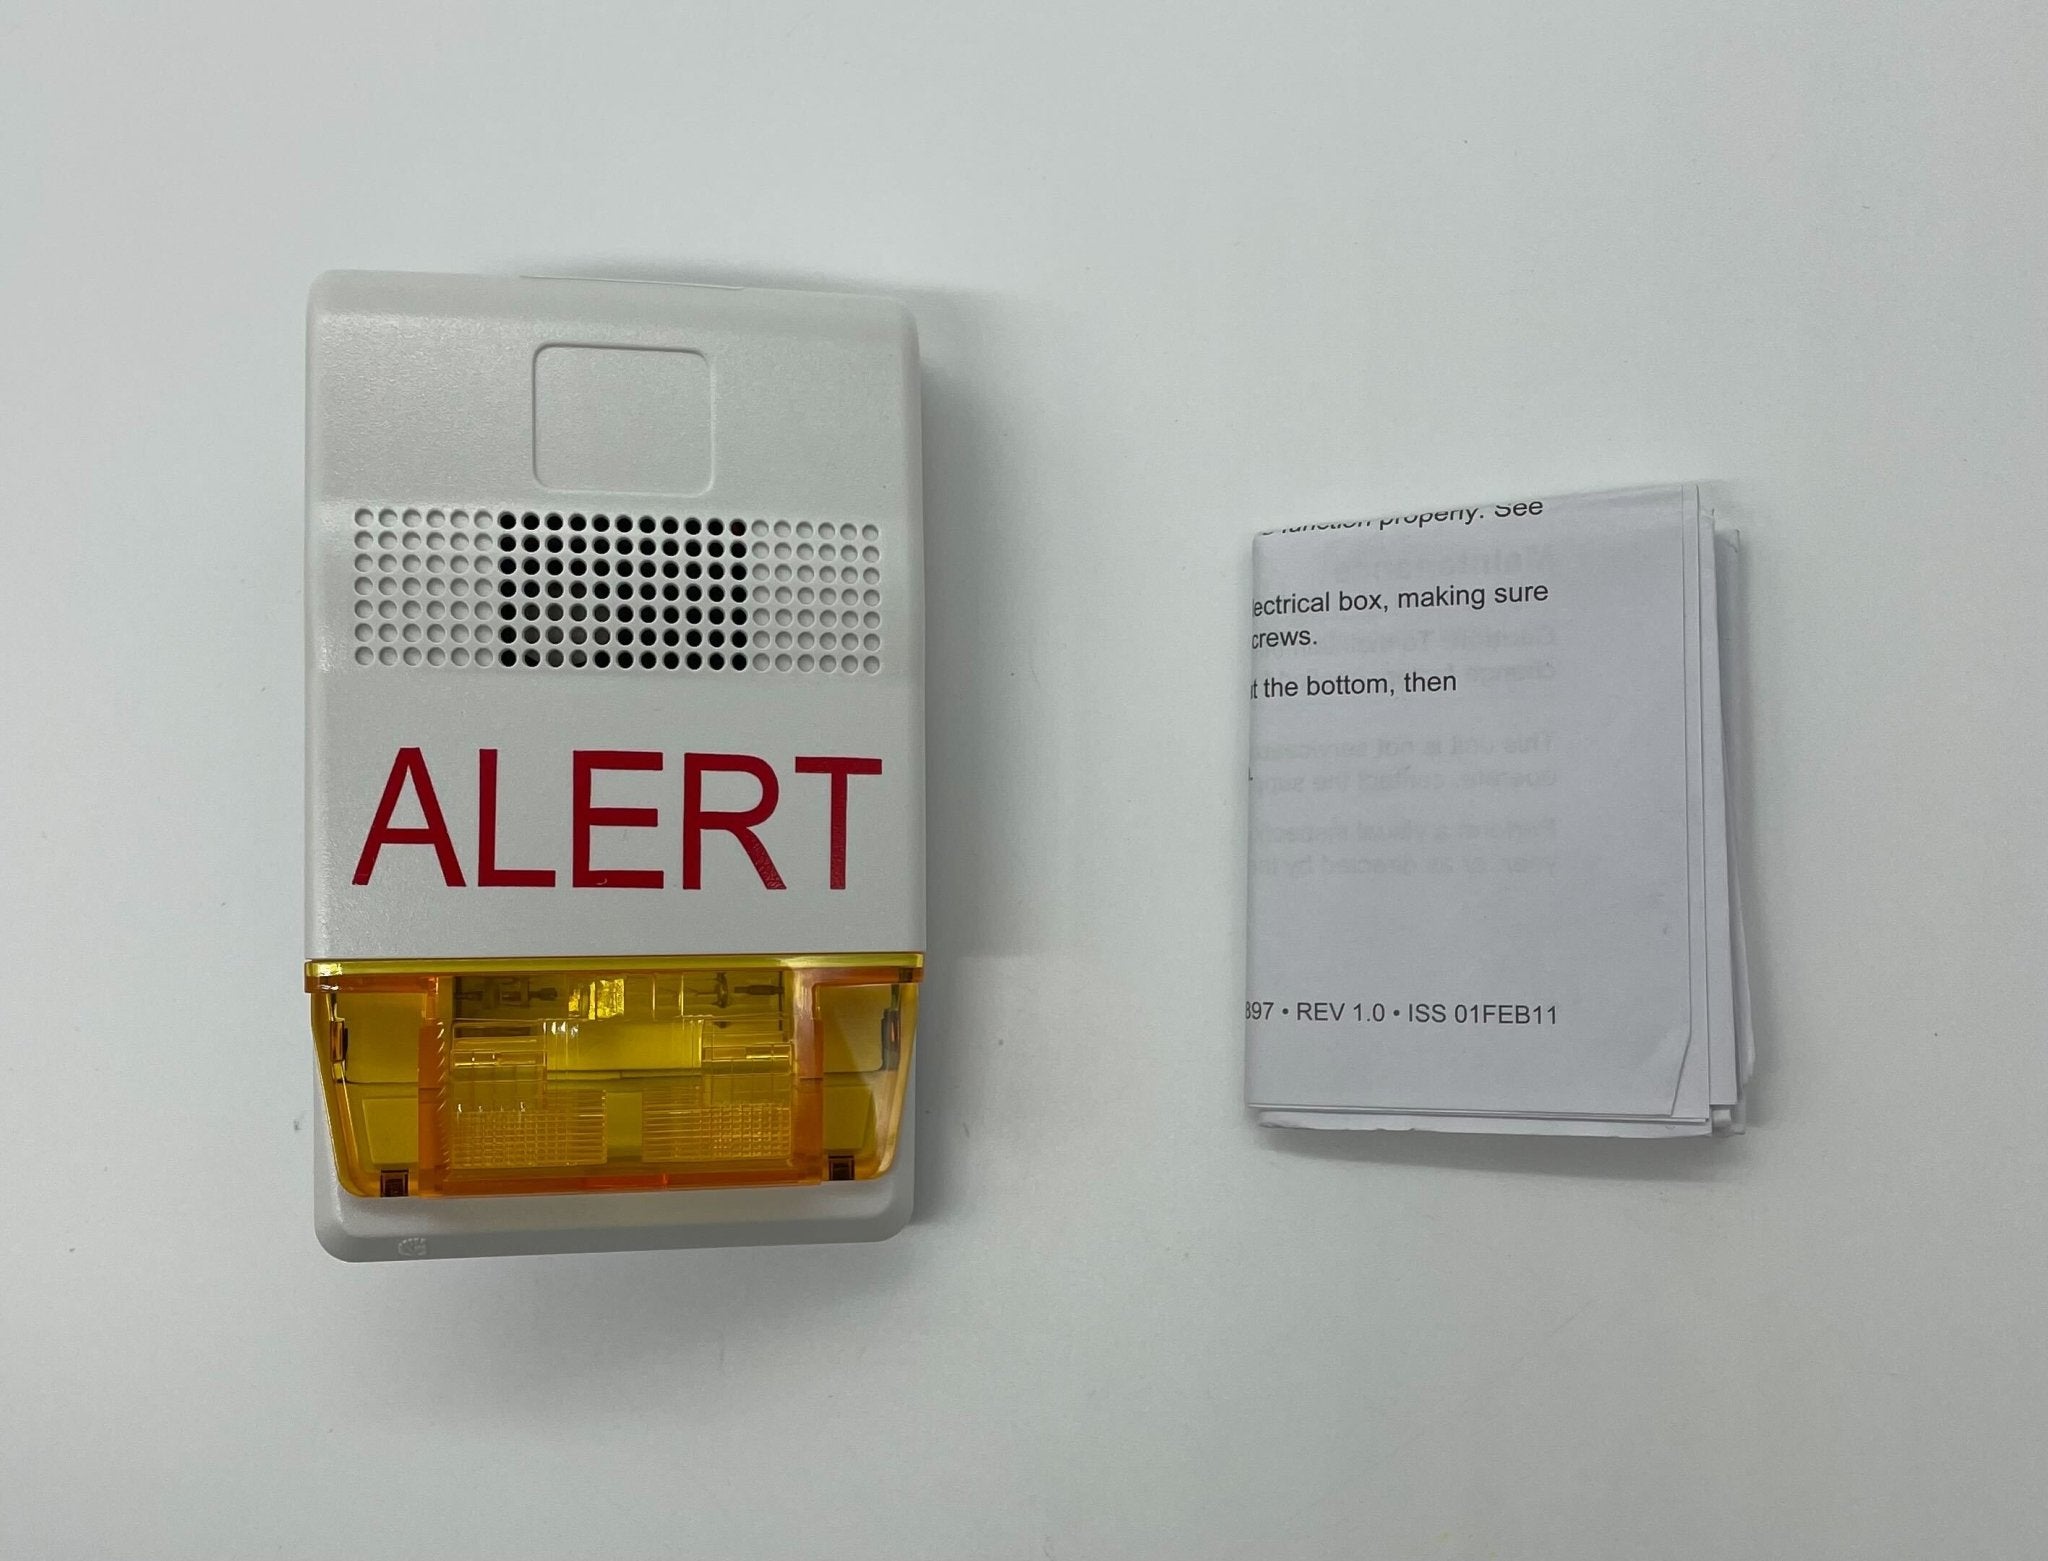 Edwards G1WA-HDVMA - The Fire Alarm Supplier